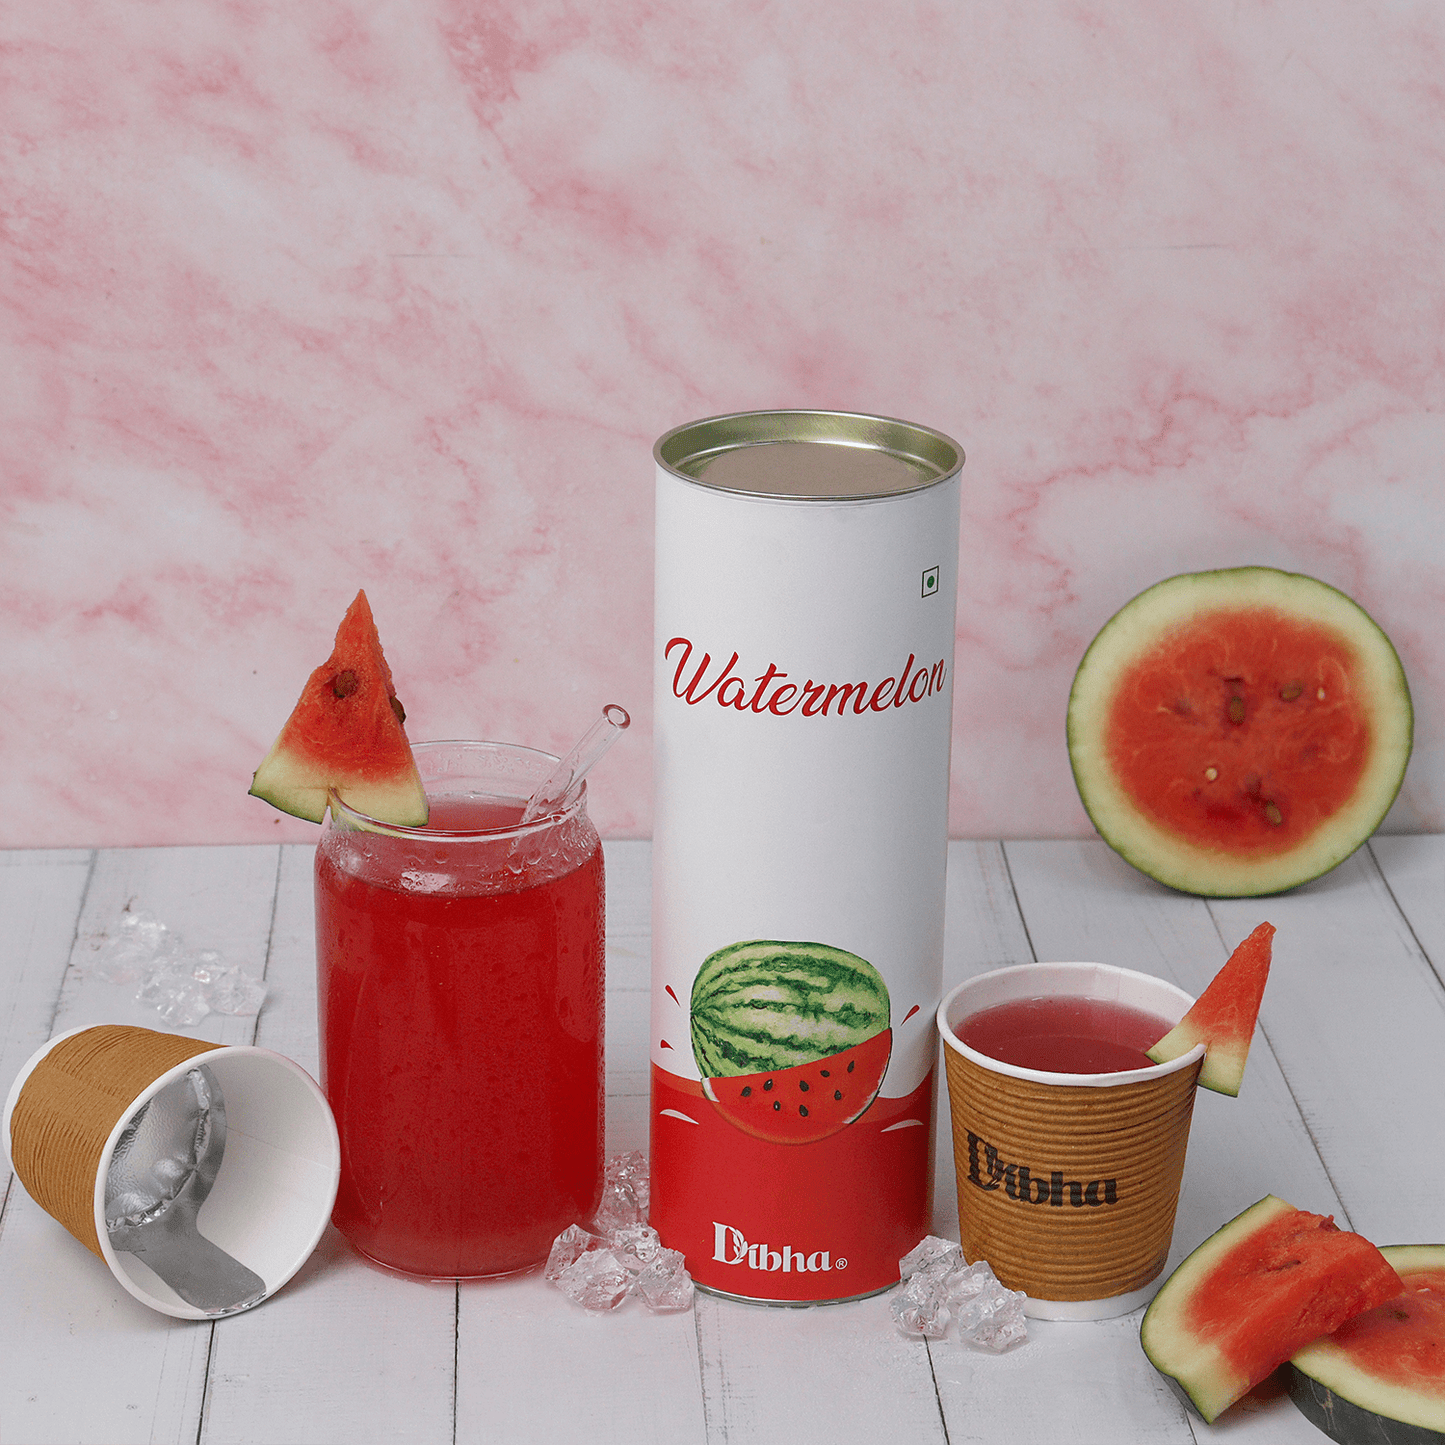 DIBHA - HONEST SNACKING Watermelon Instant Drink Premix - Fruit Power, 100% Natural, 140g (7 Instant Premix Cups Each Packs)